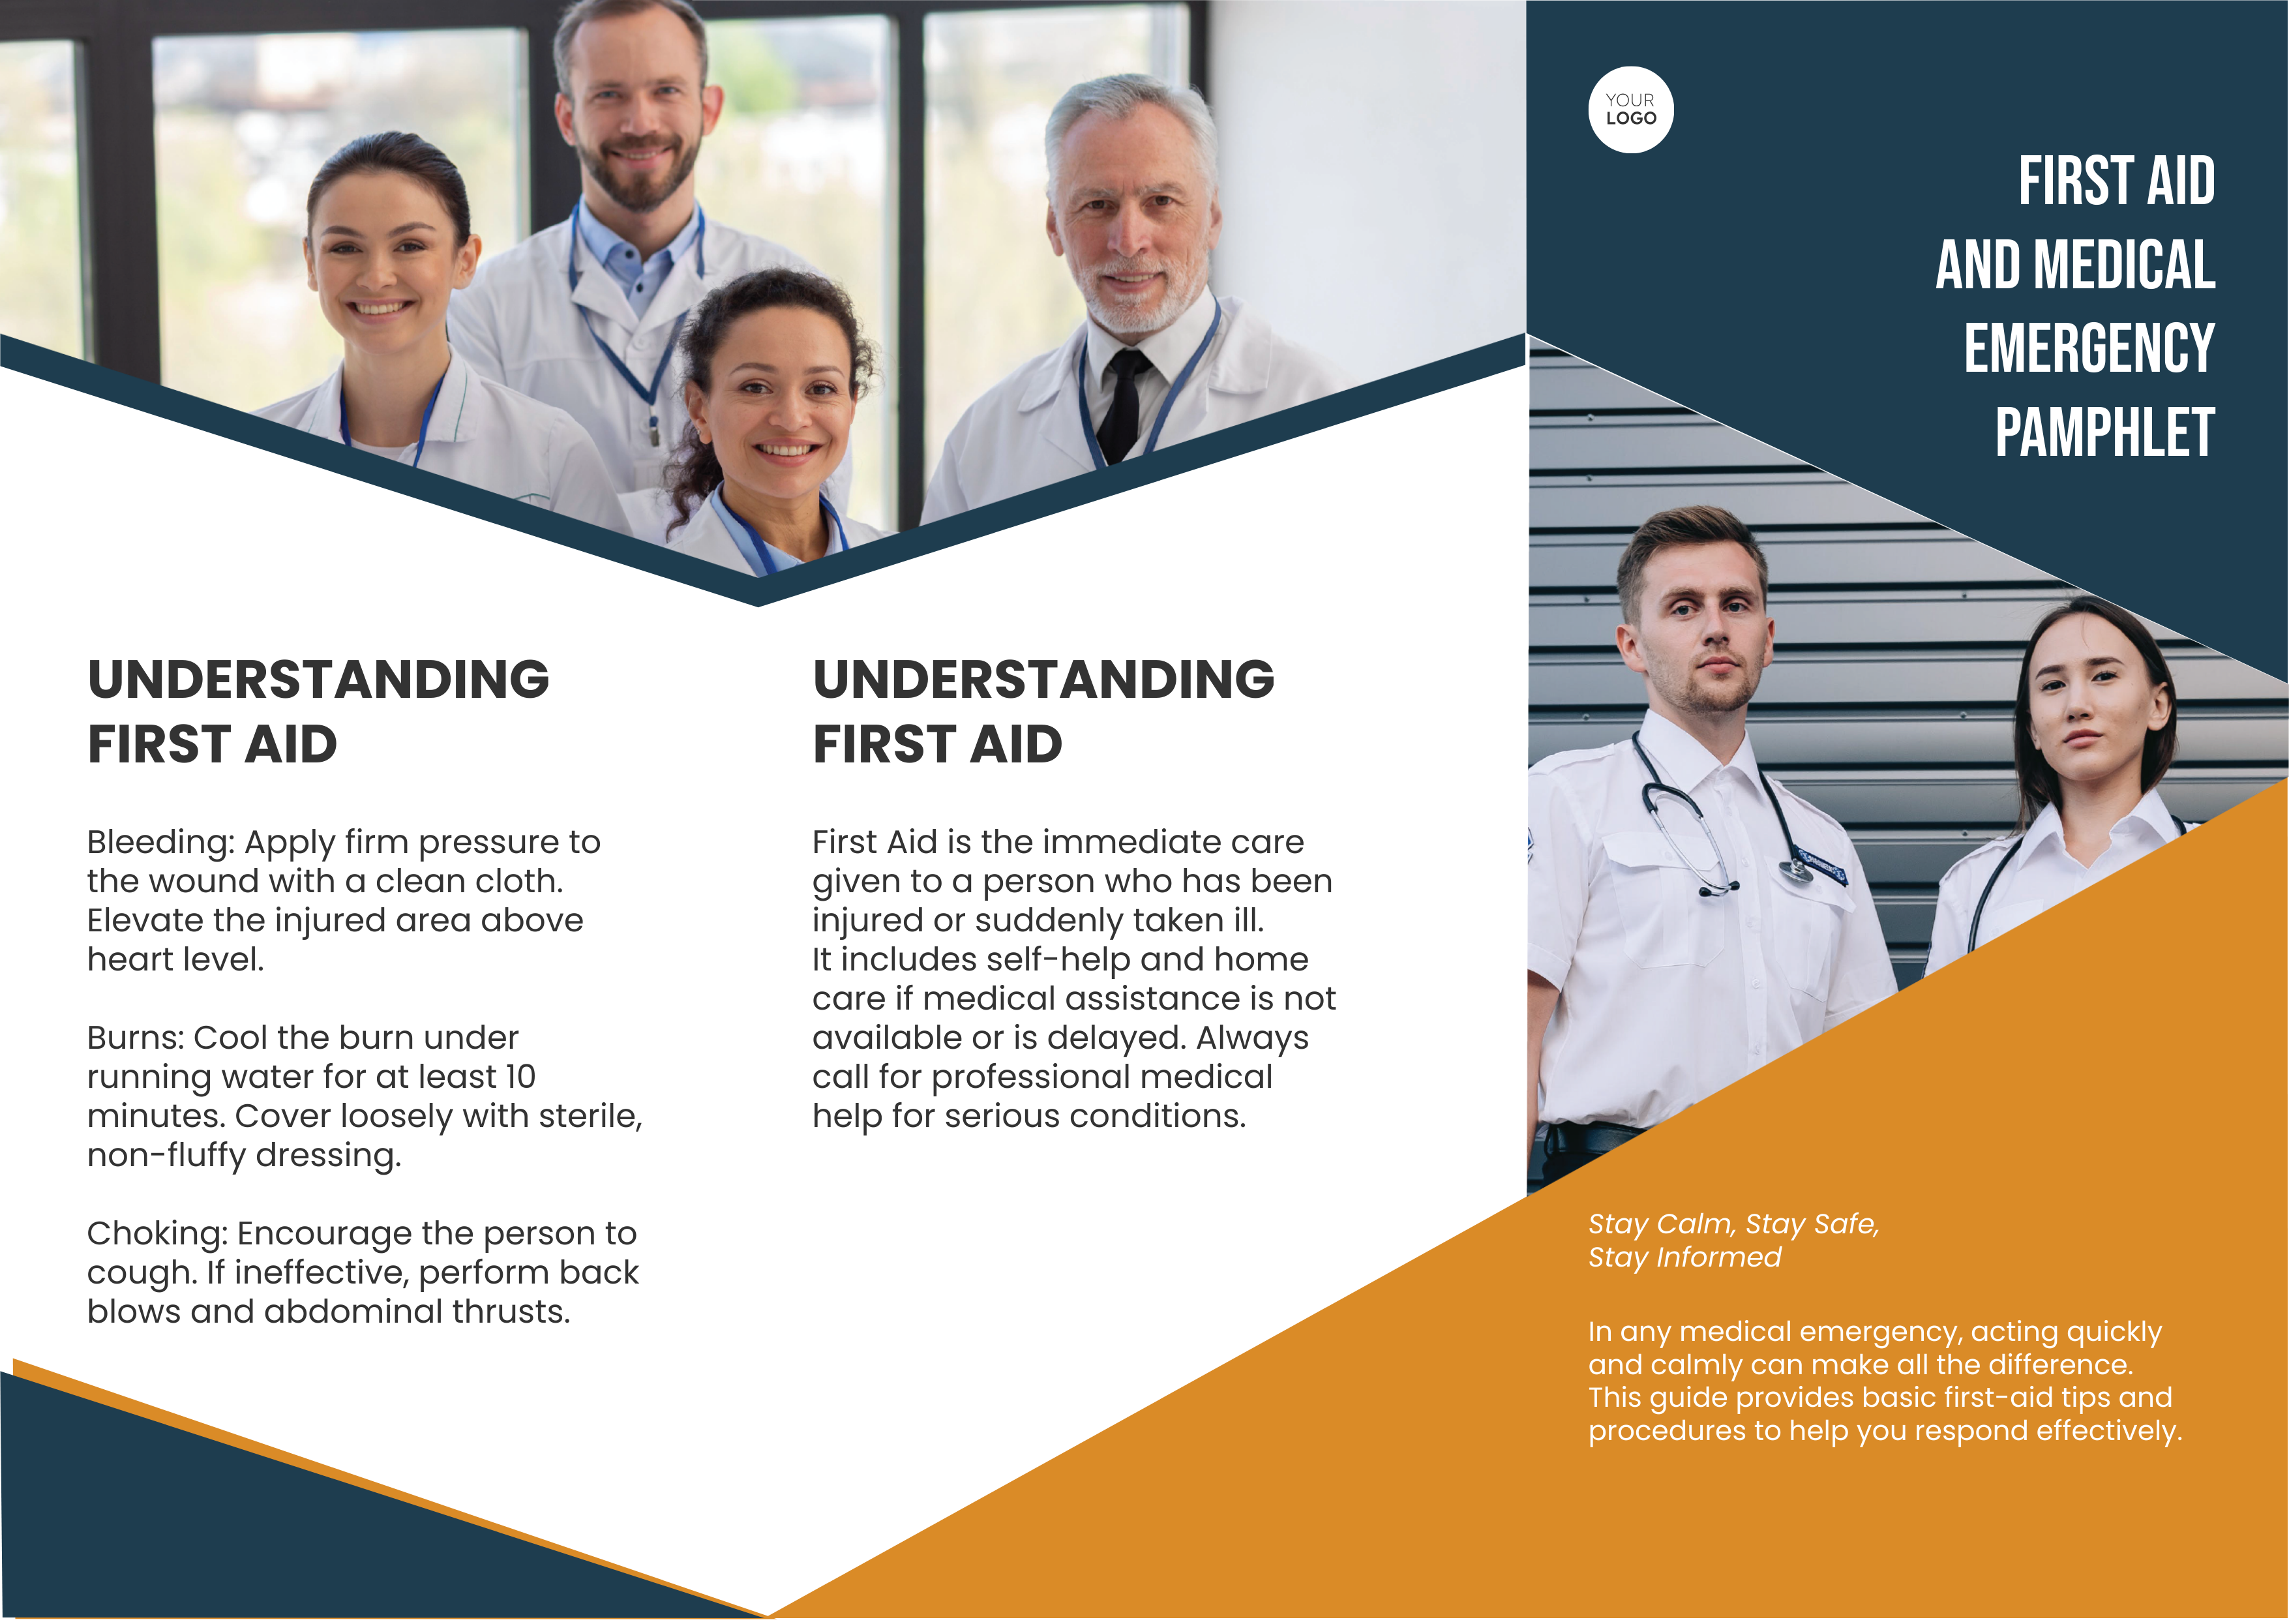 Basic First Aid for Medical Emergencies